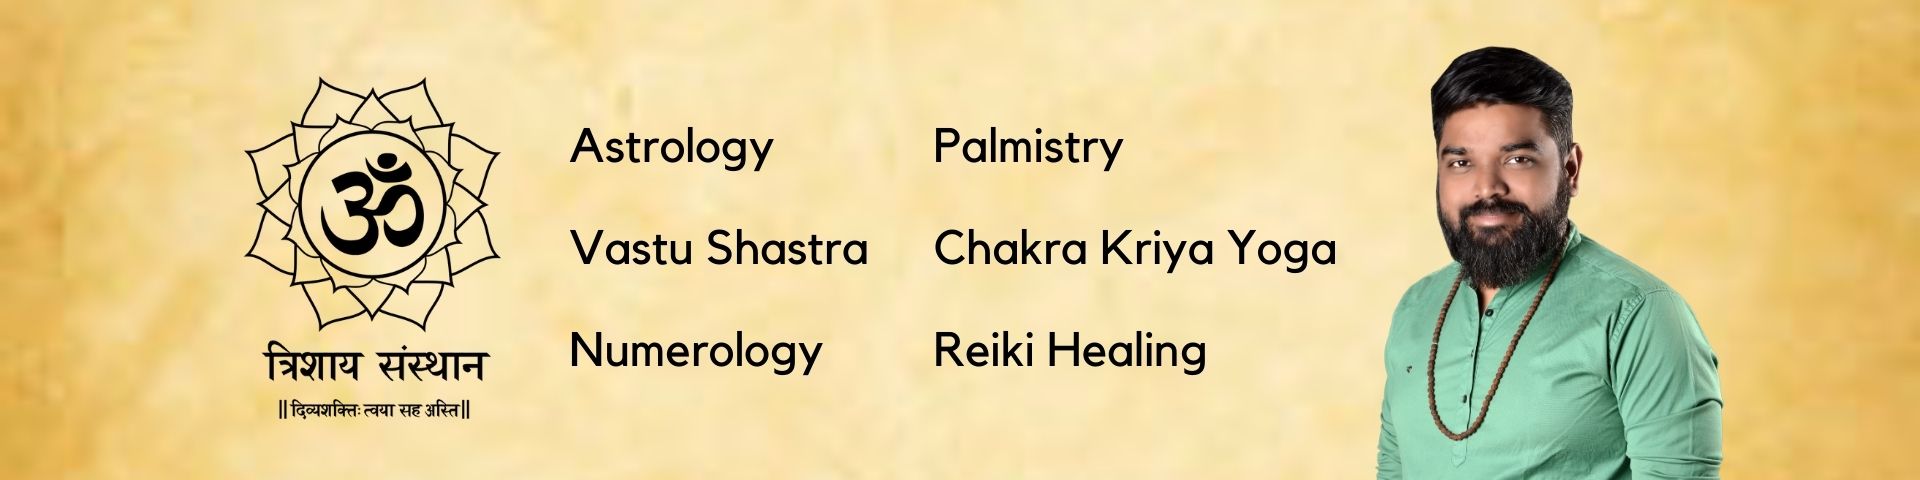 Astrology Vastu Shastra Numerology